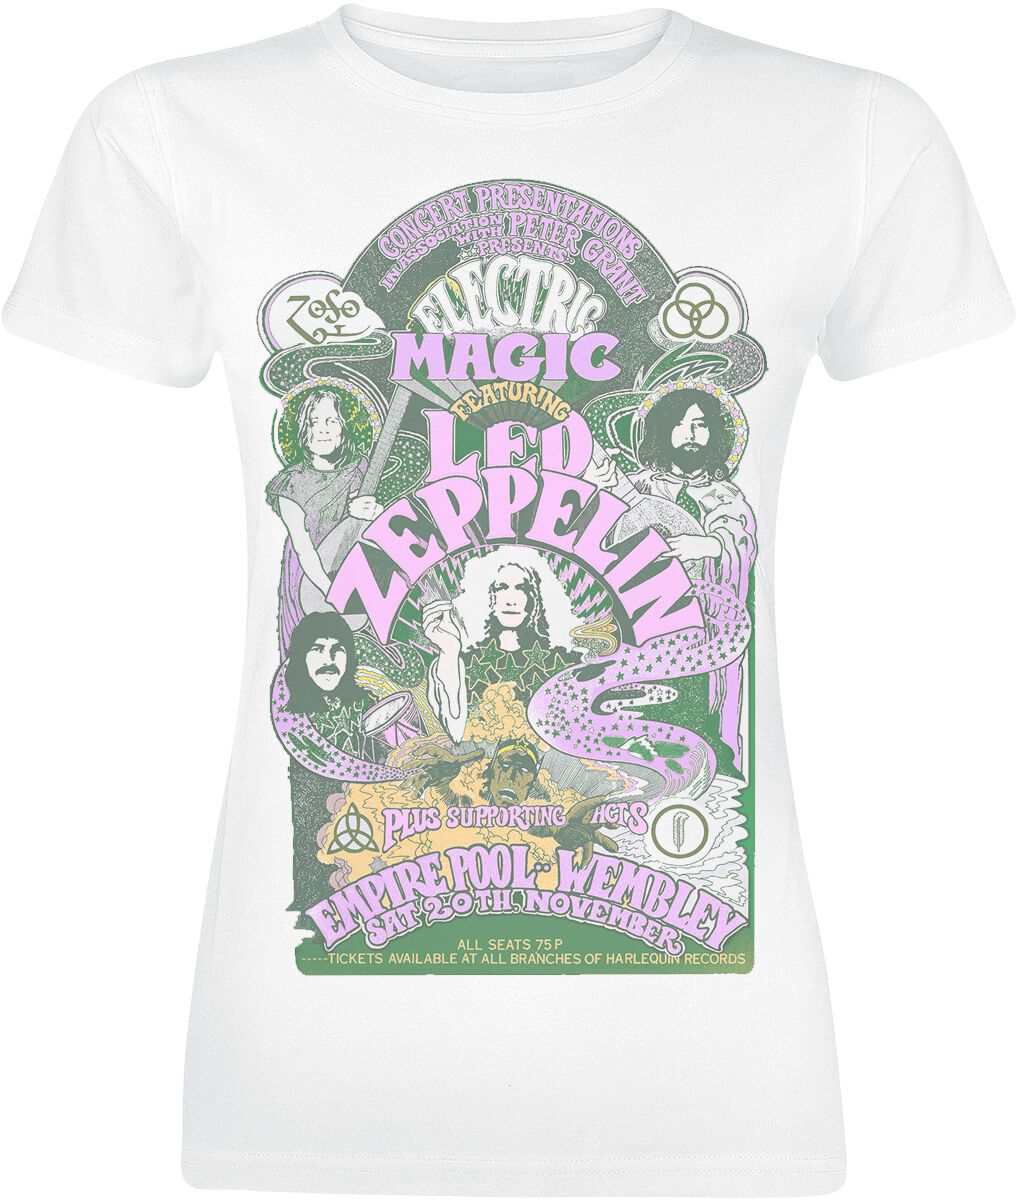 Led Zeppelin Electric Magic T-Shirt white